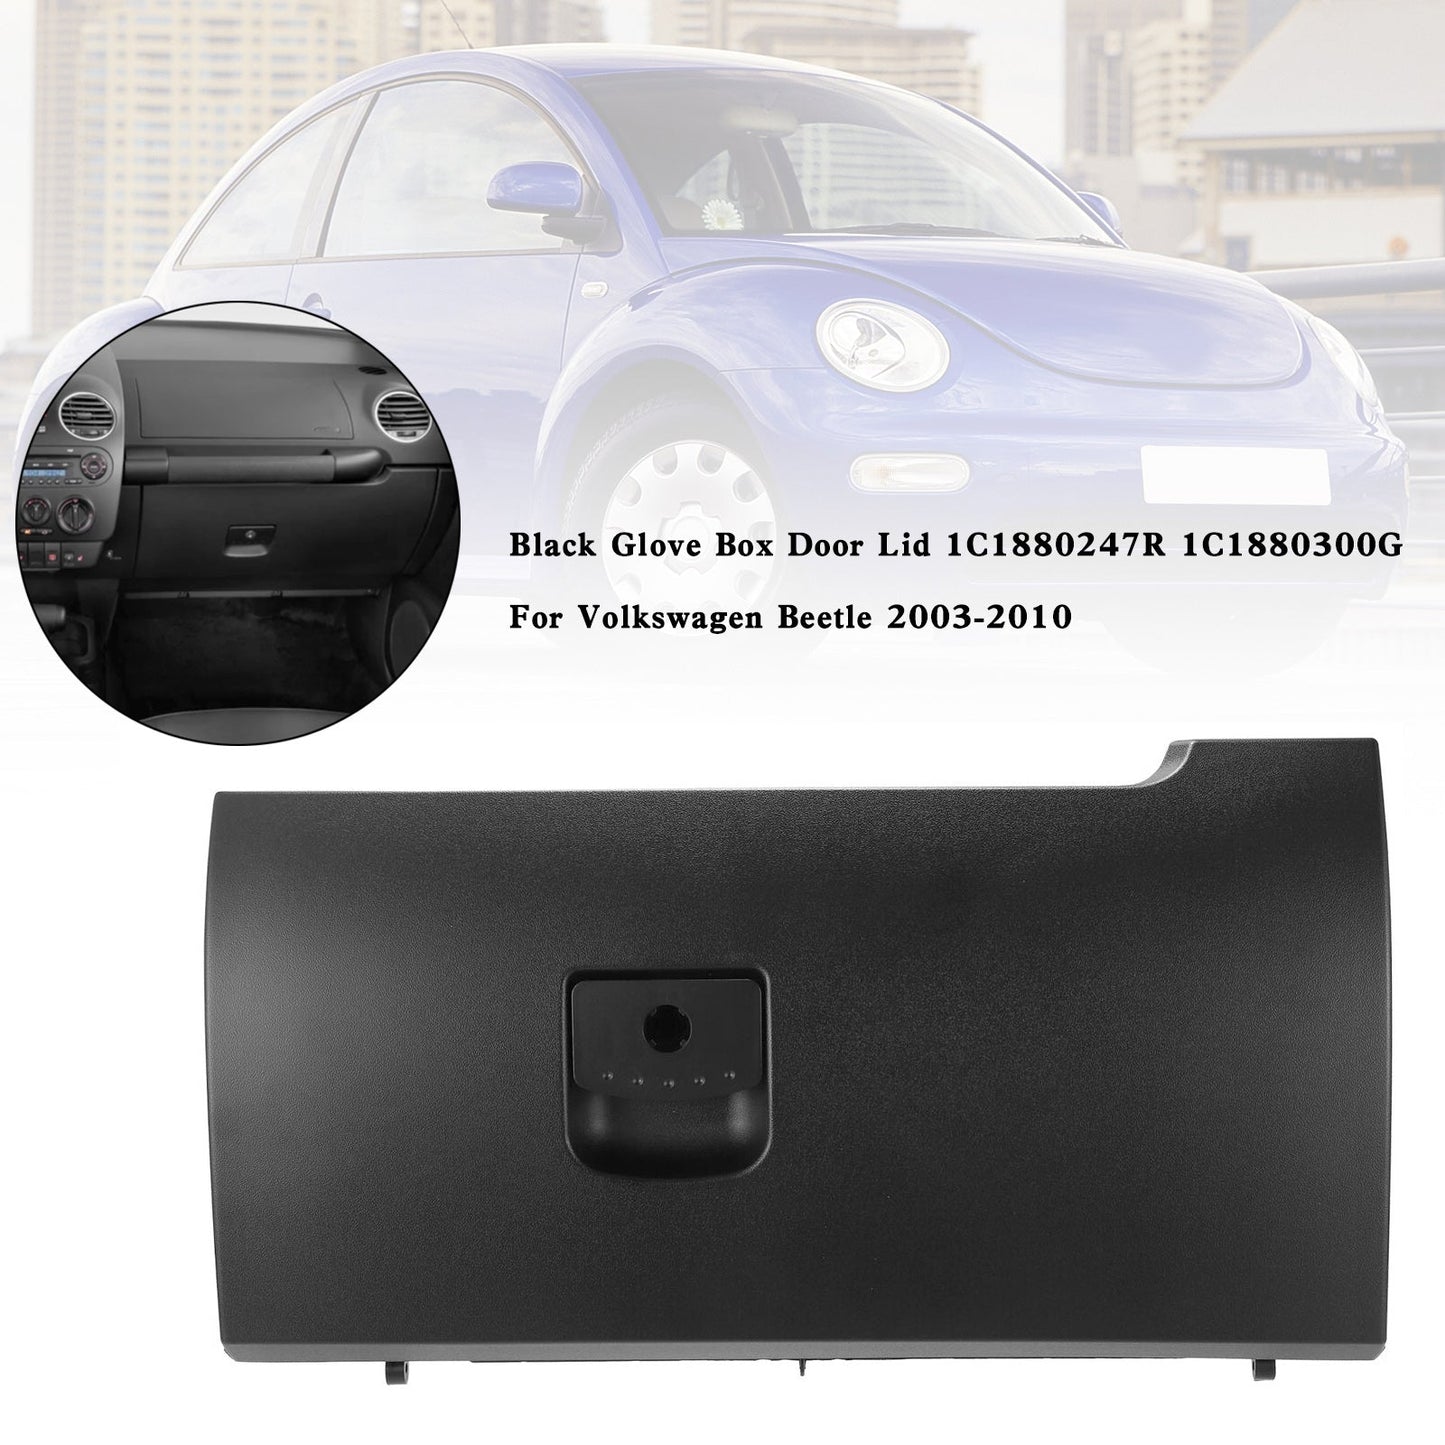 Volkswagen Beetle 2003–2010 schwarzer Handschuhfach-Türdeckel 1C1880247R 1C1880300G